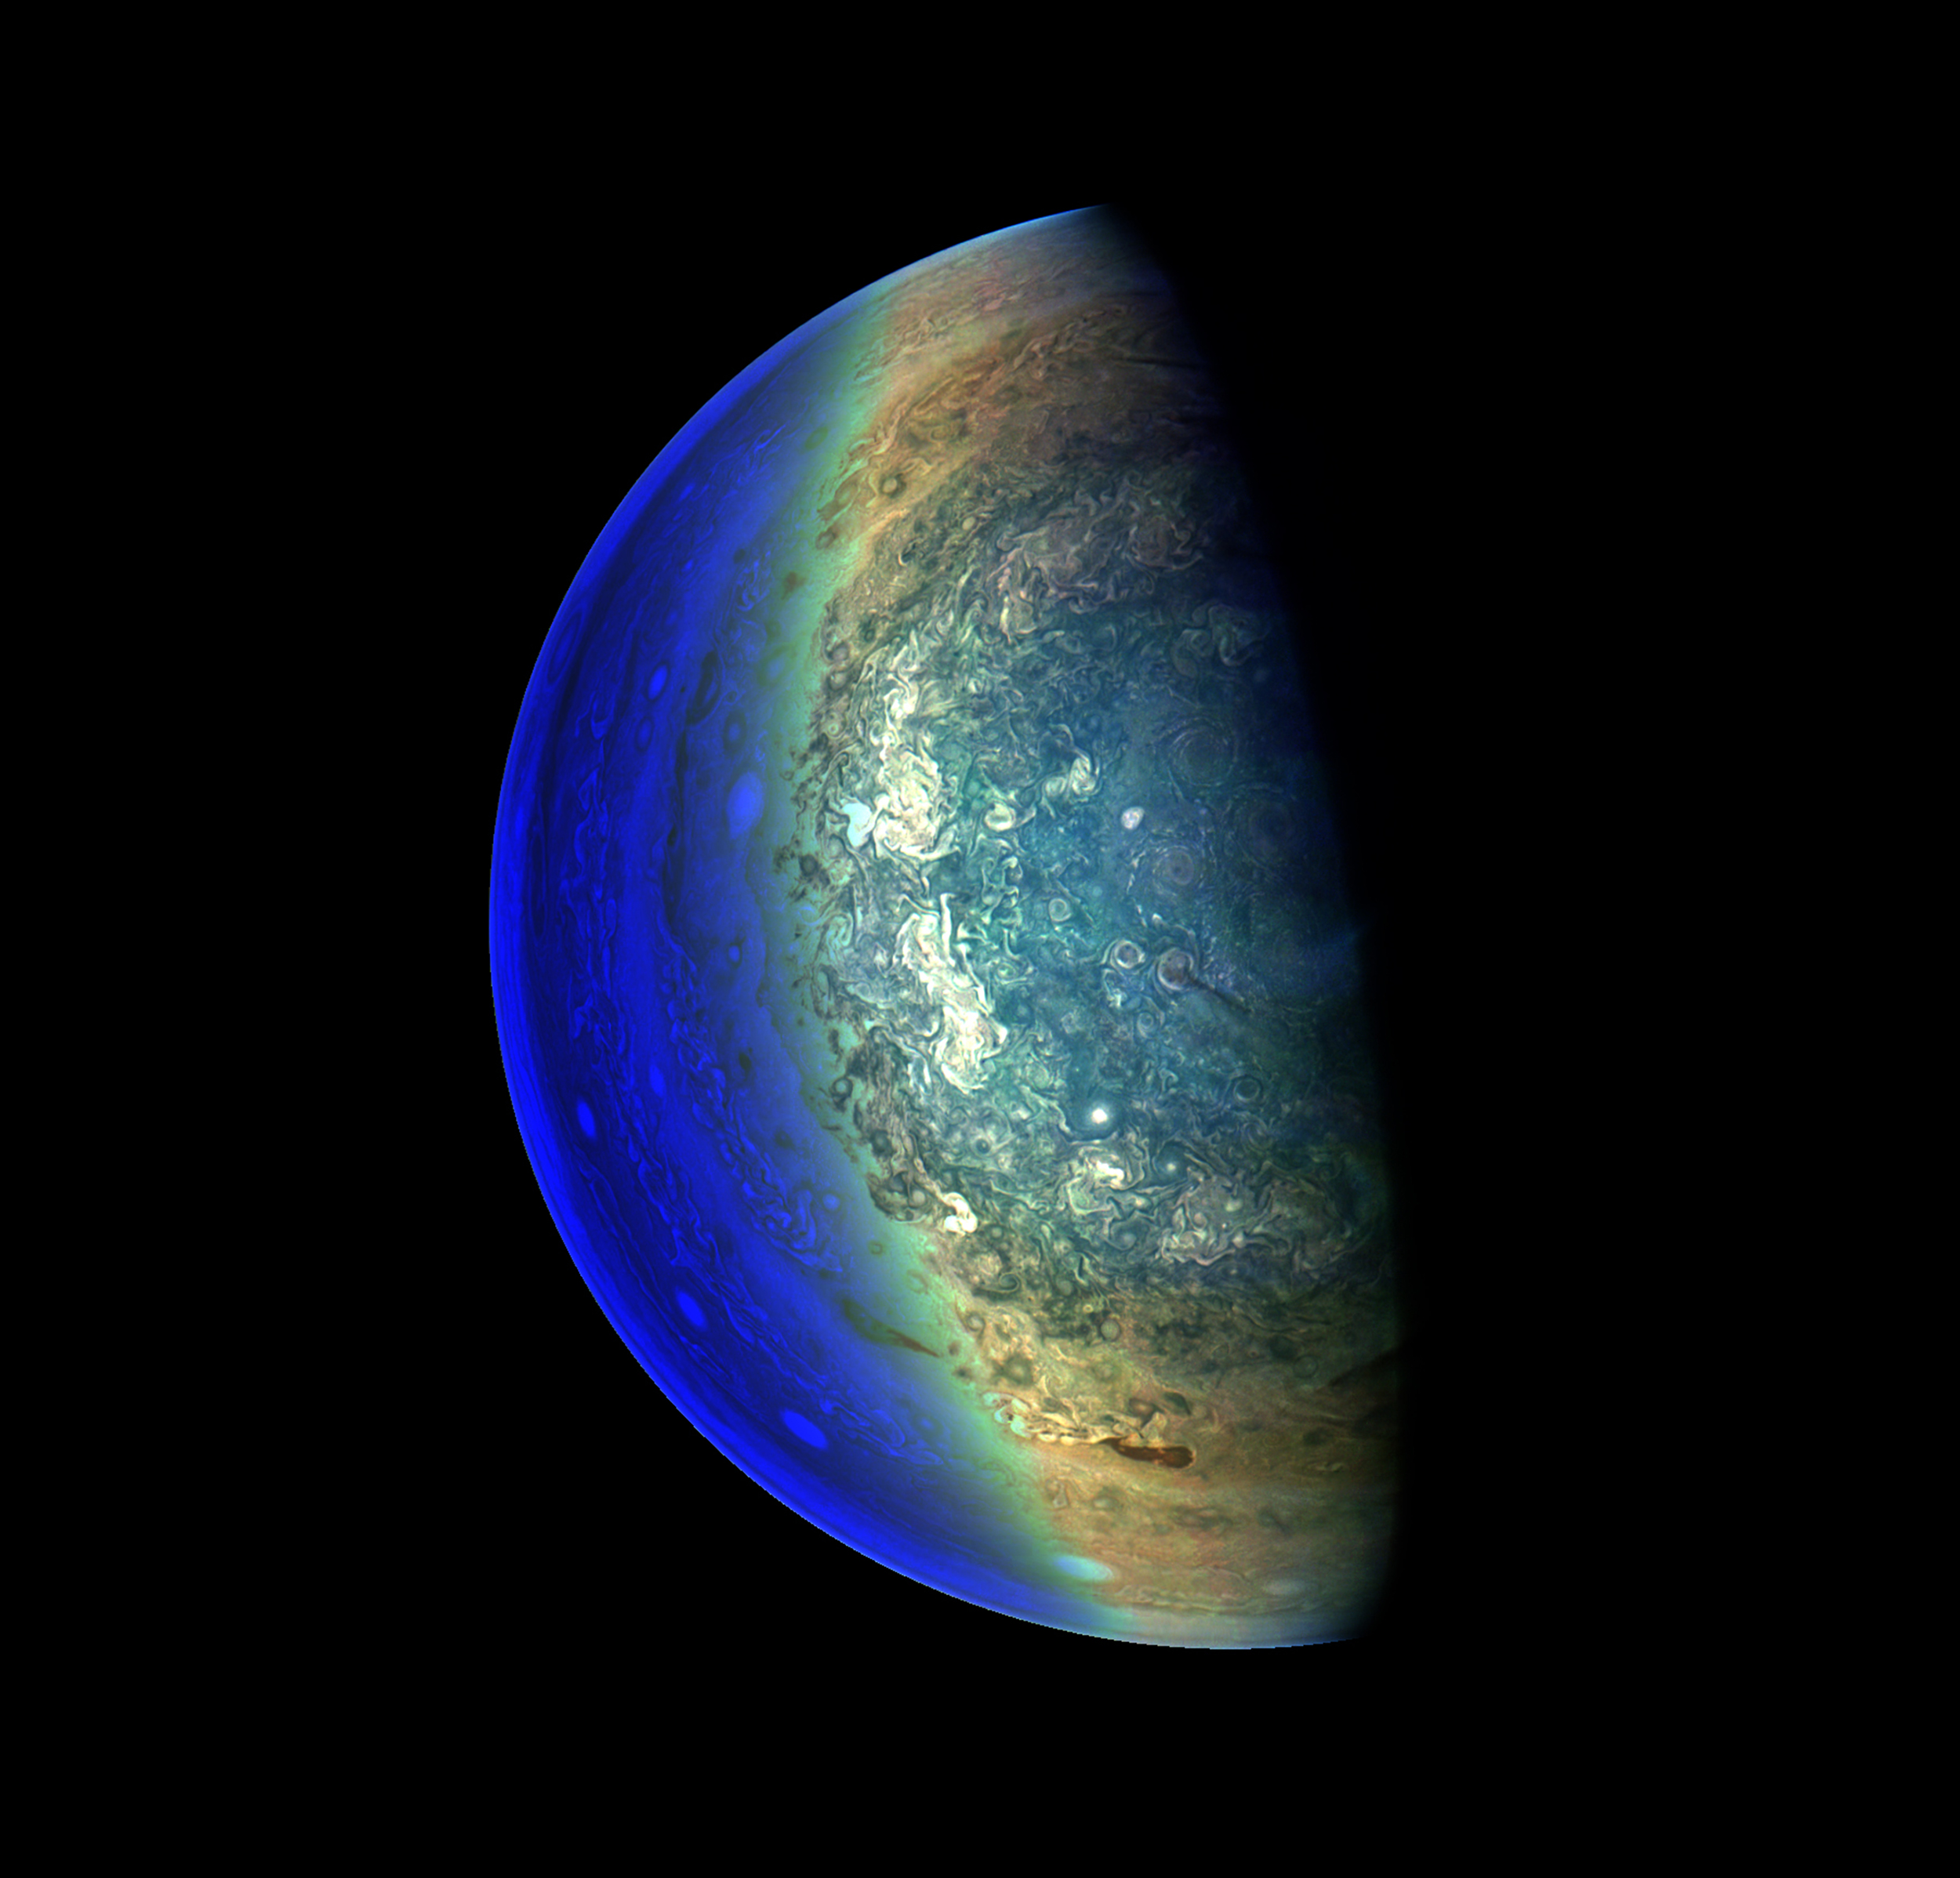 NASAs stunning new photo of Jupiter looks like a work of art